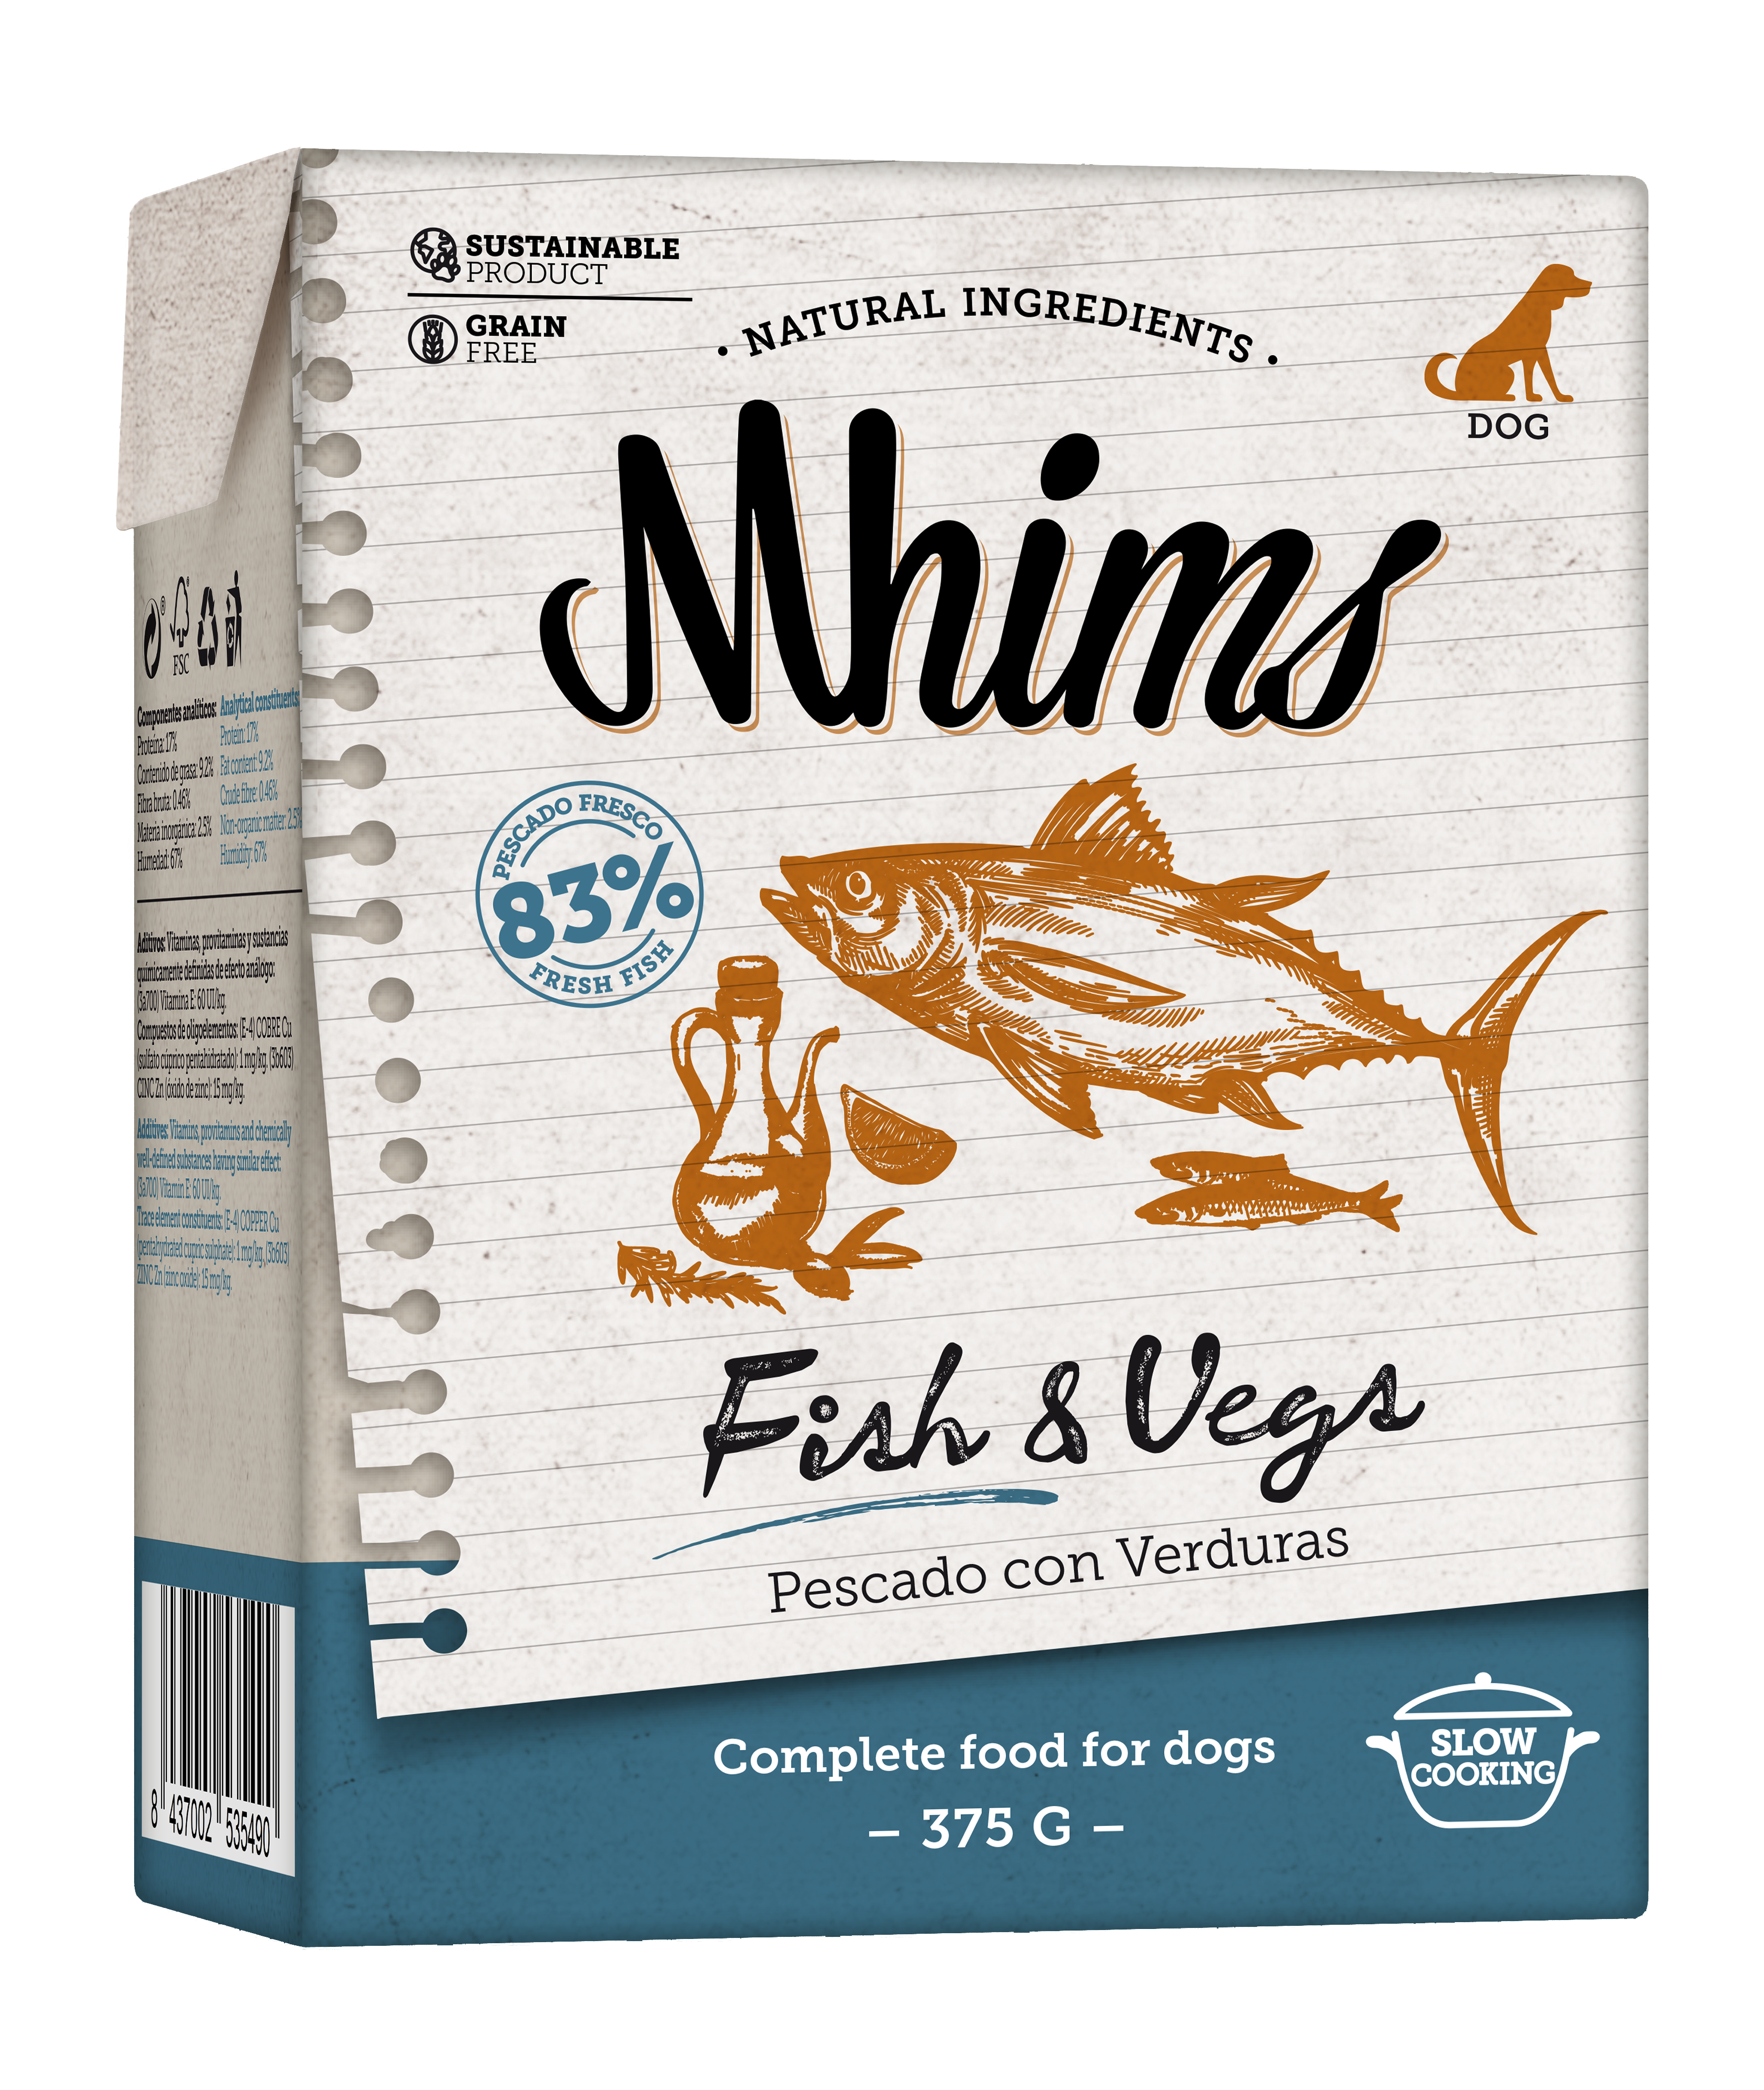 Mhims dog fish & vegs 375g